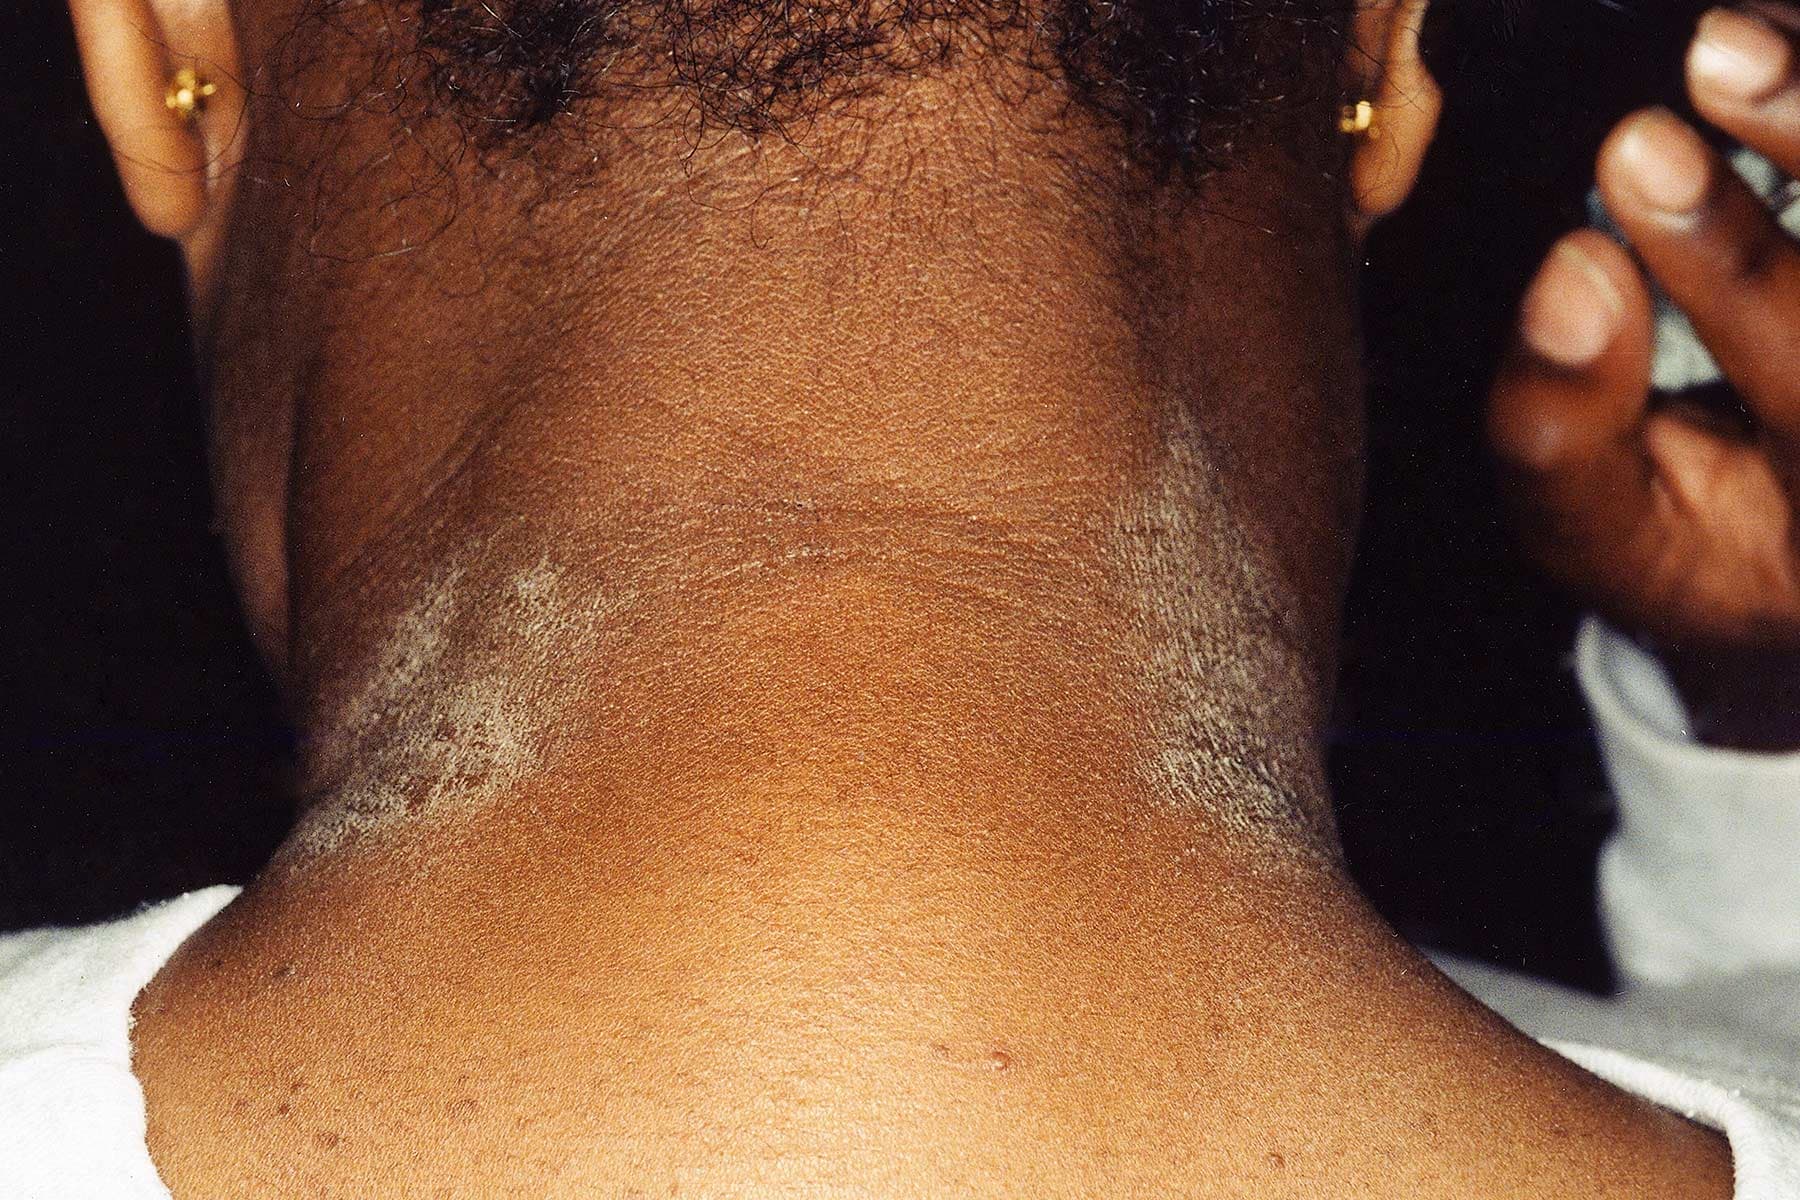 Eczema Pictures: What an Eczema Rash Looks Like